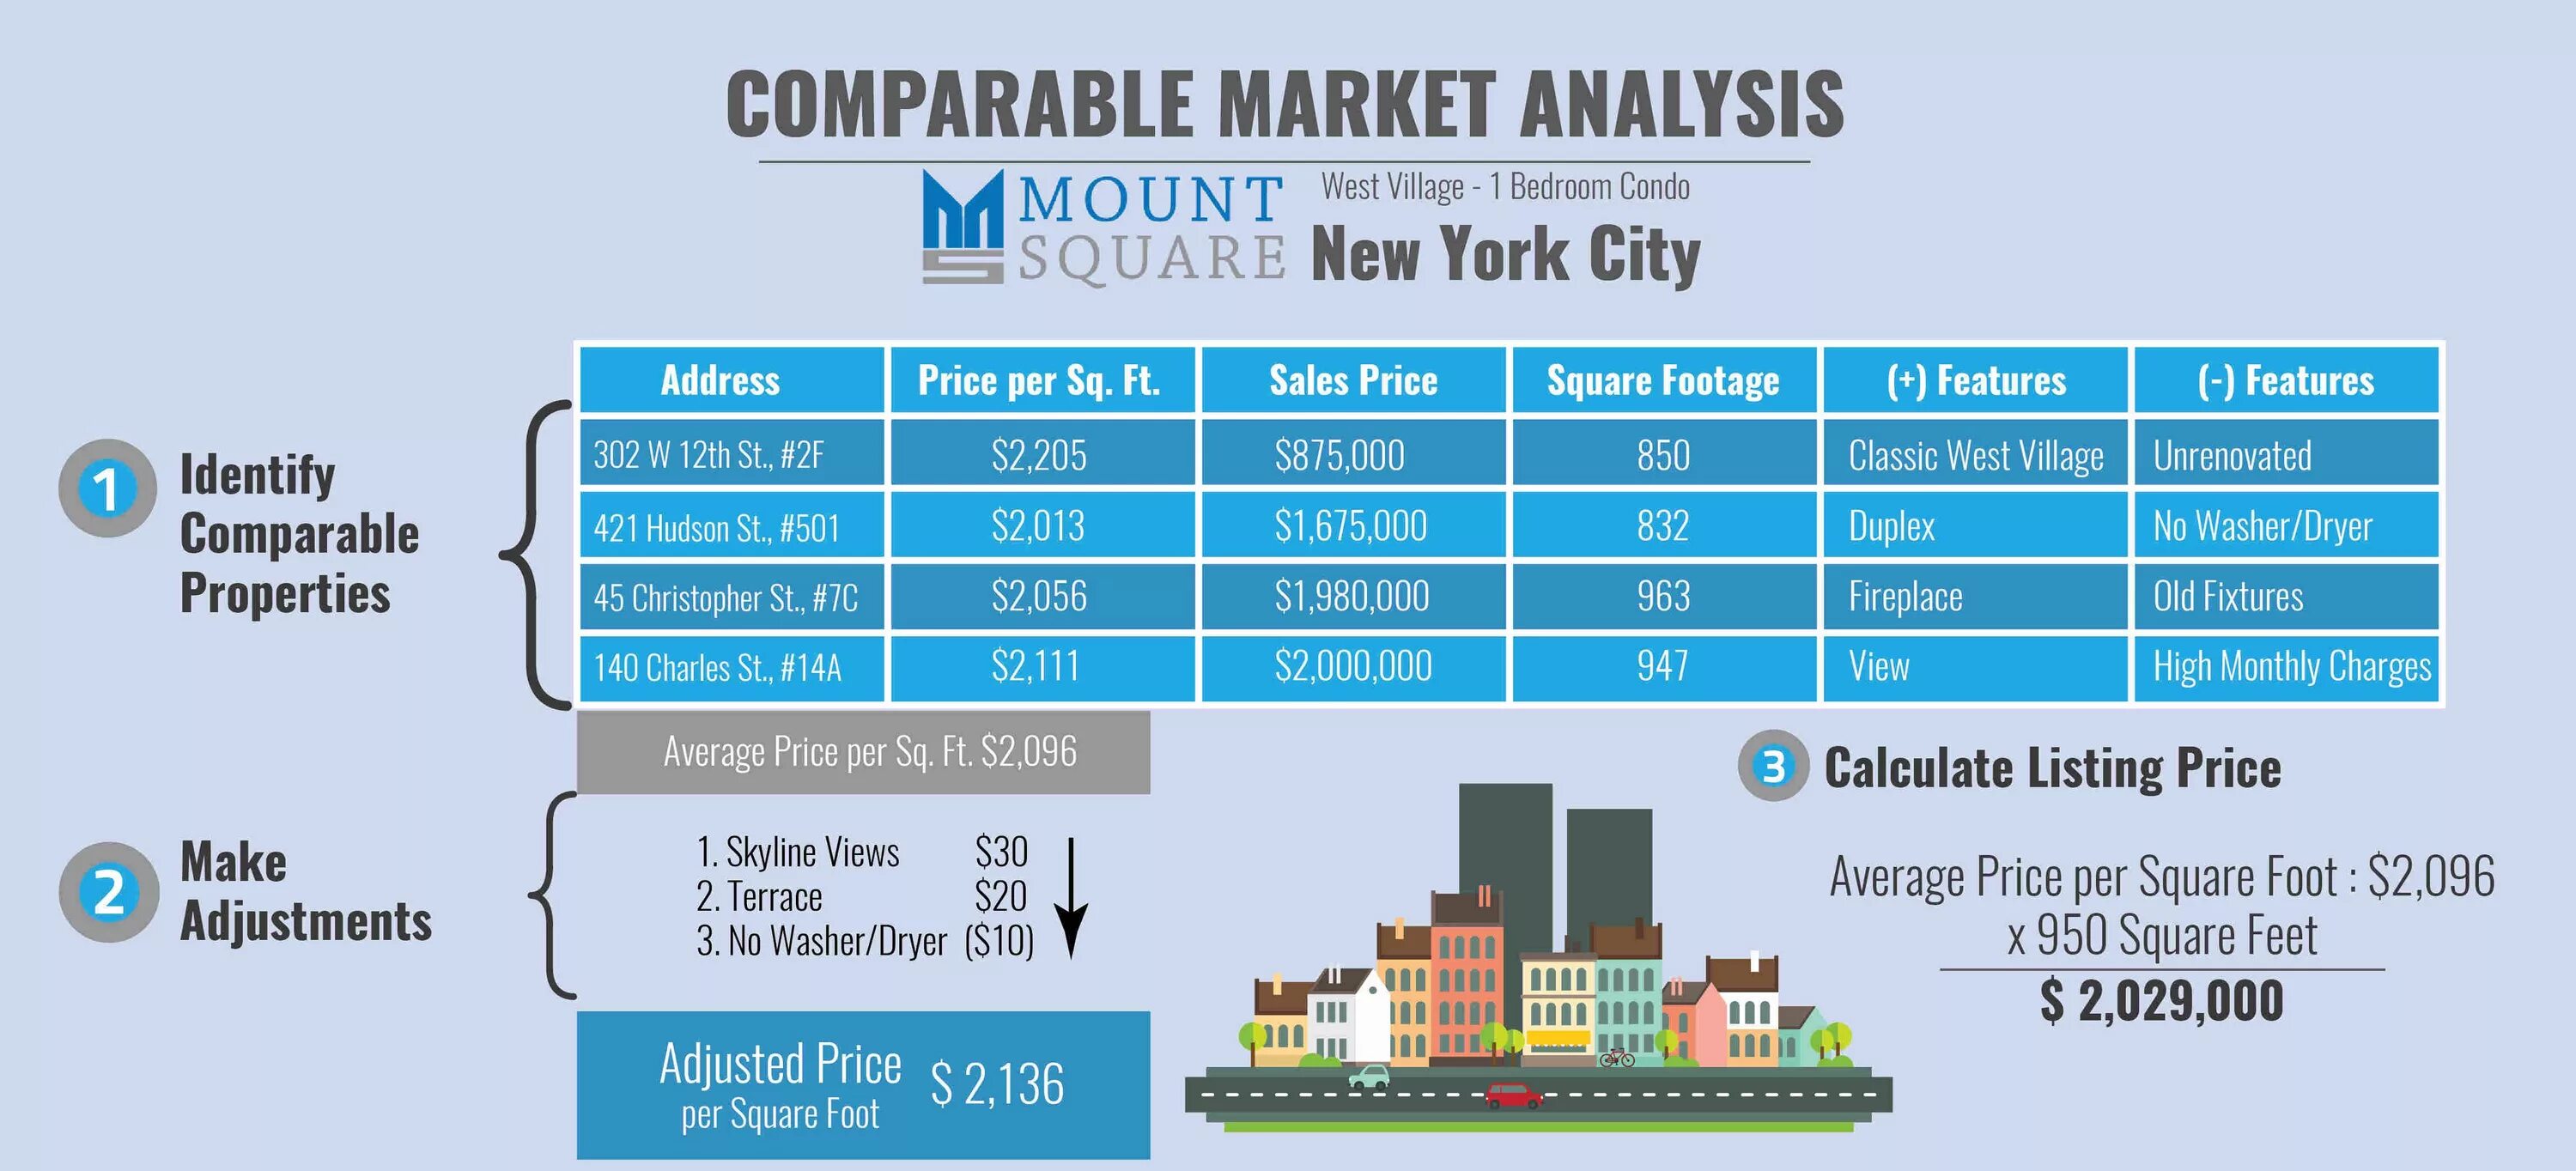 Market Analysis is. Инфографика недвижимость. Property Market Analysis. Market Analysis example.